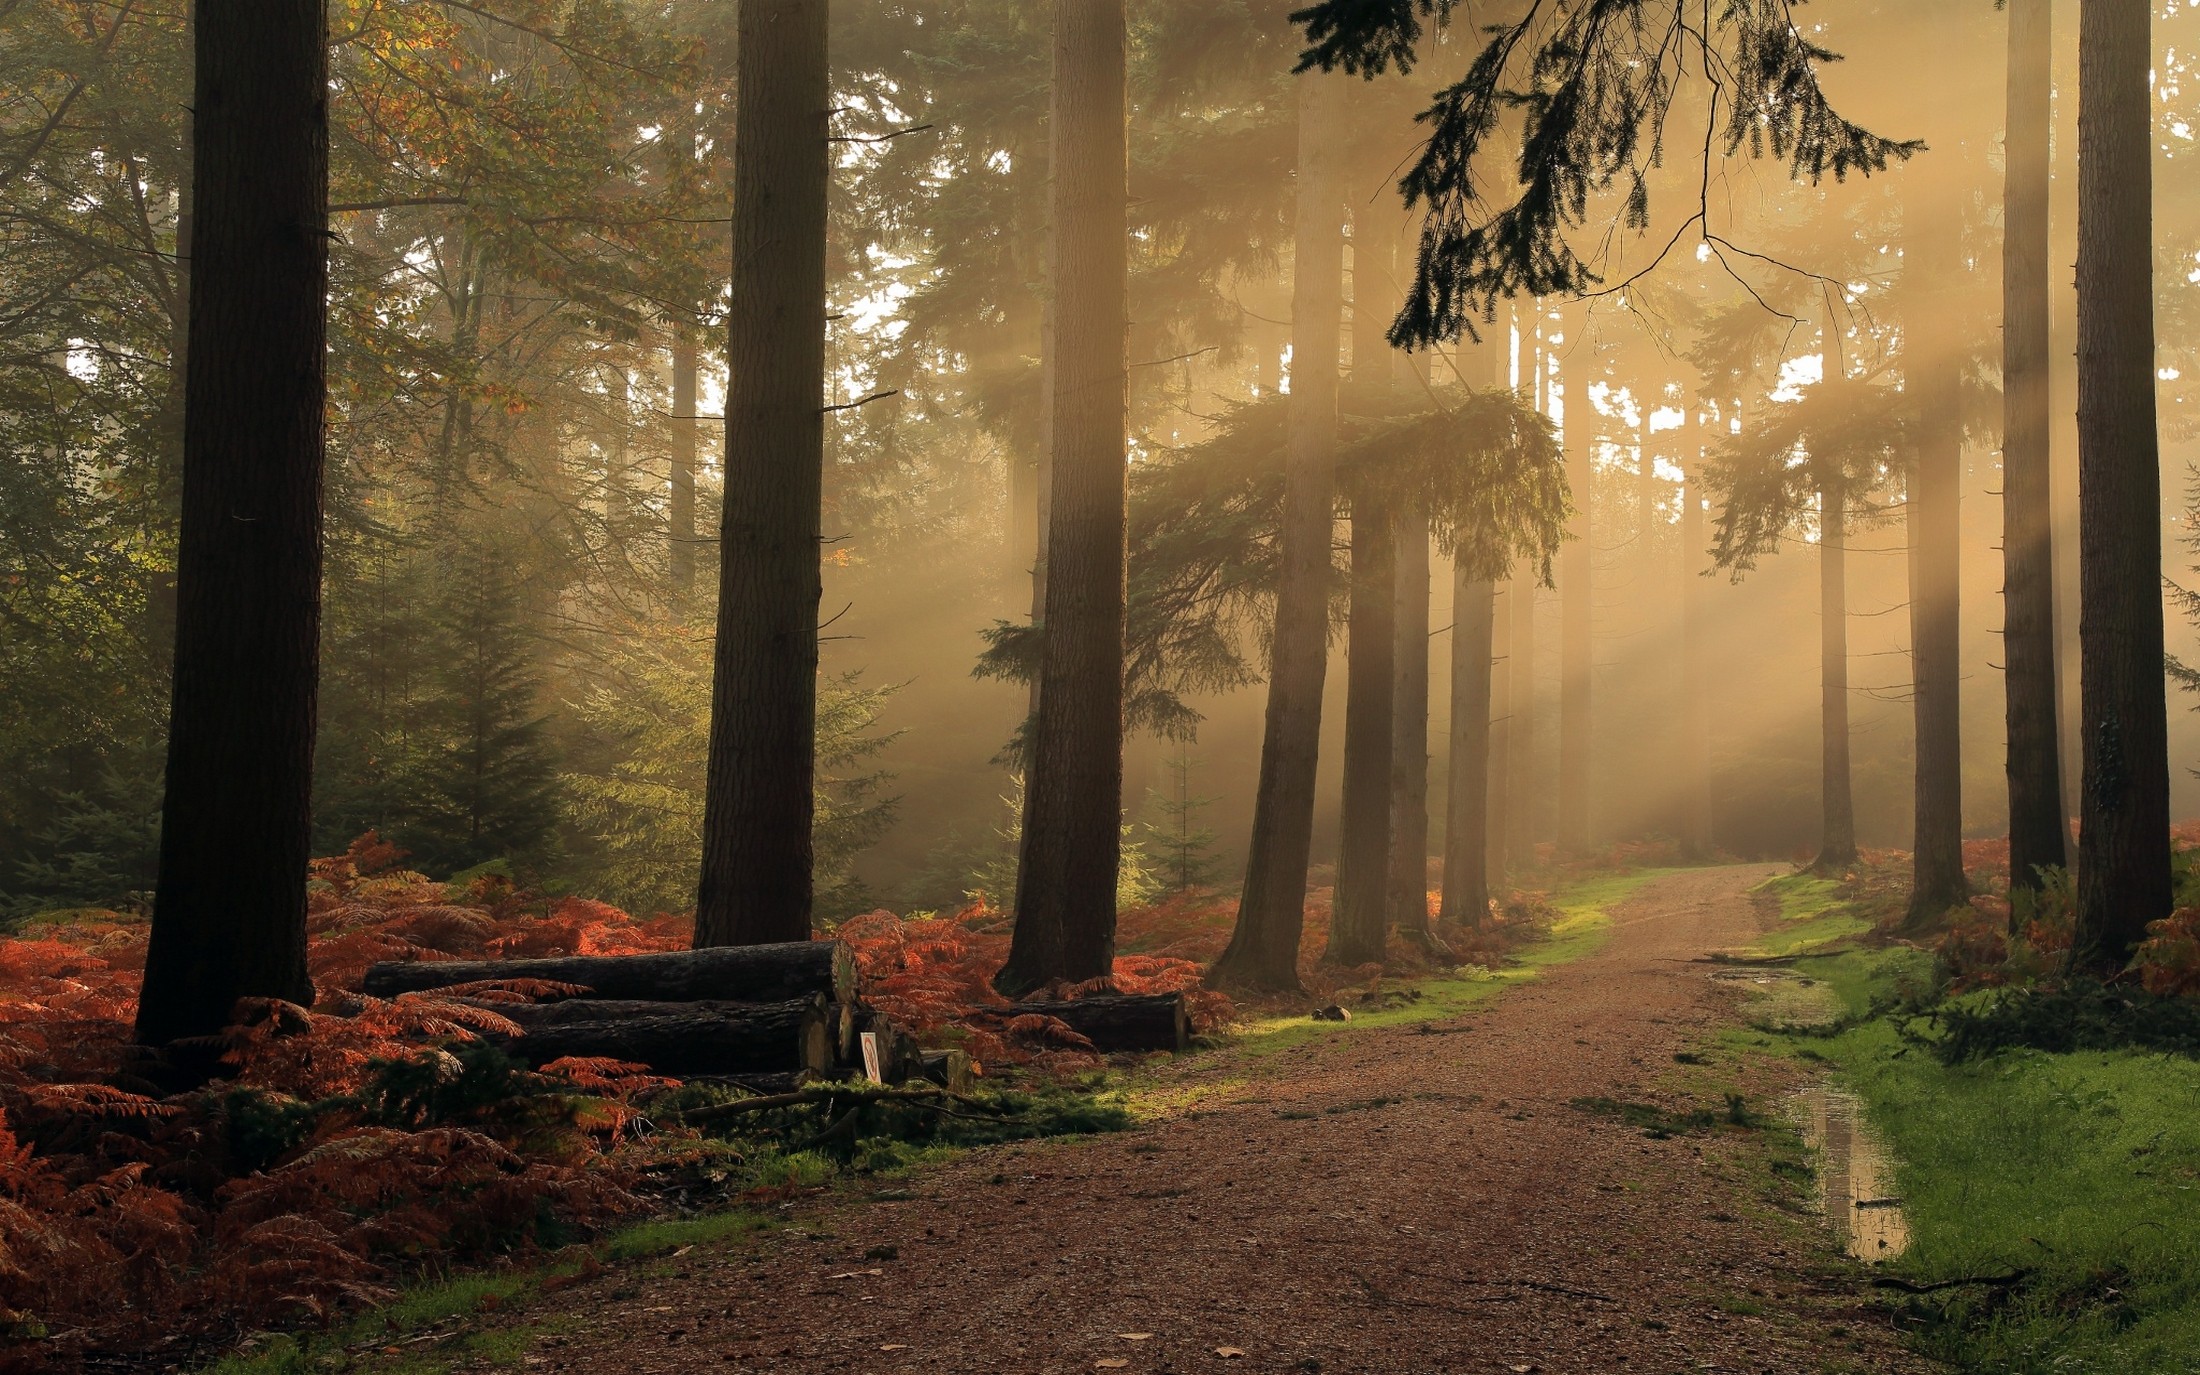 landscape-Nature-Mist-Dirt-Road-Forest-Shrubs-Morning-Trees-Fall-Hungary-Atmosphere-.jpg